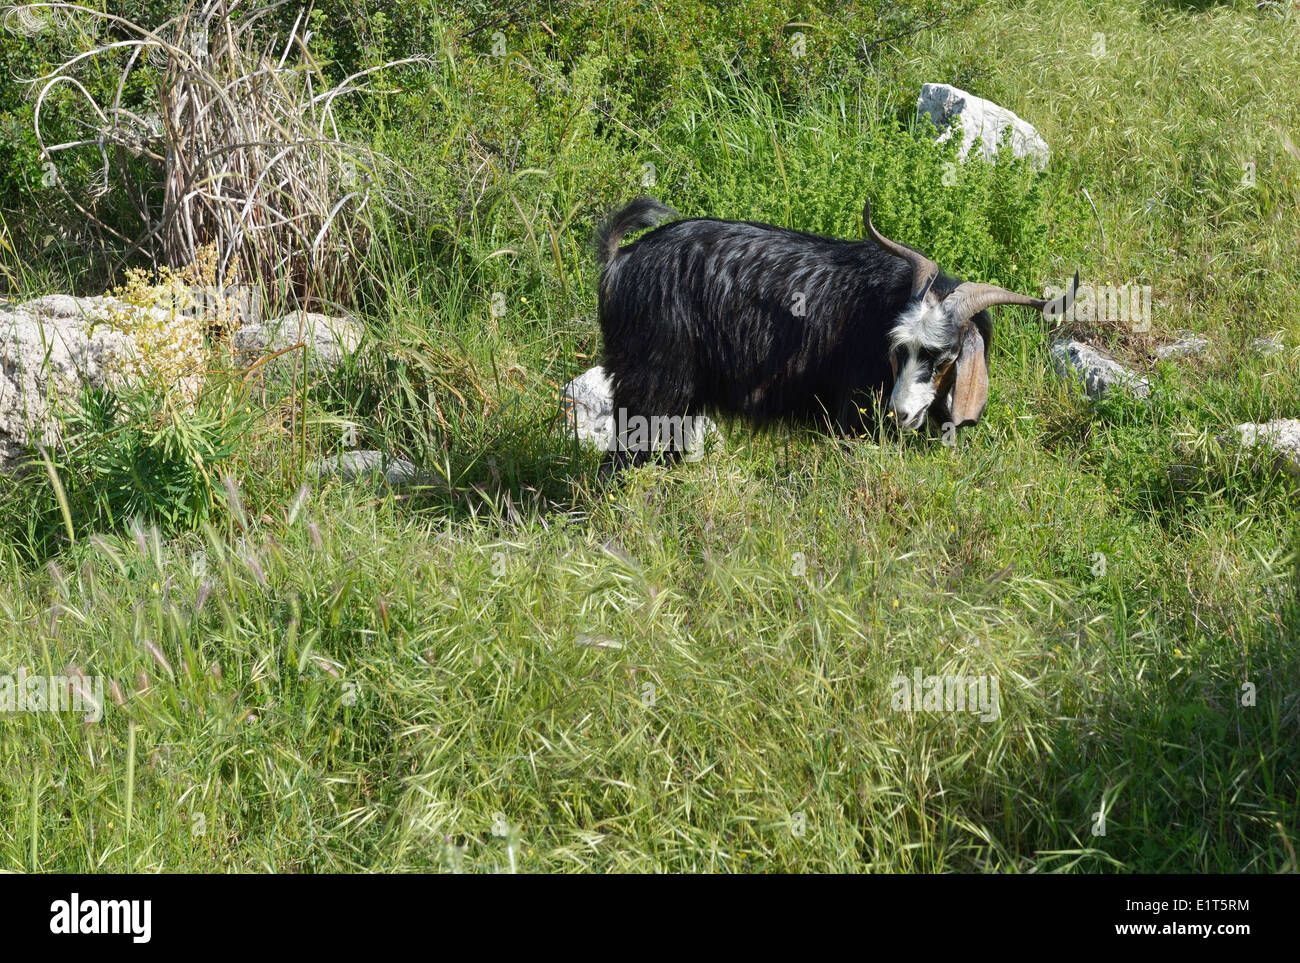 Goat eating grass in the Byzantine Basilica, Xanthos, Turkey 140422 60949 Stock Photo